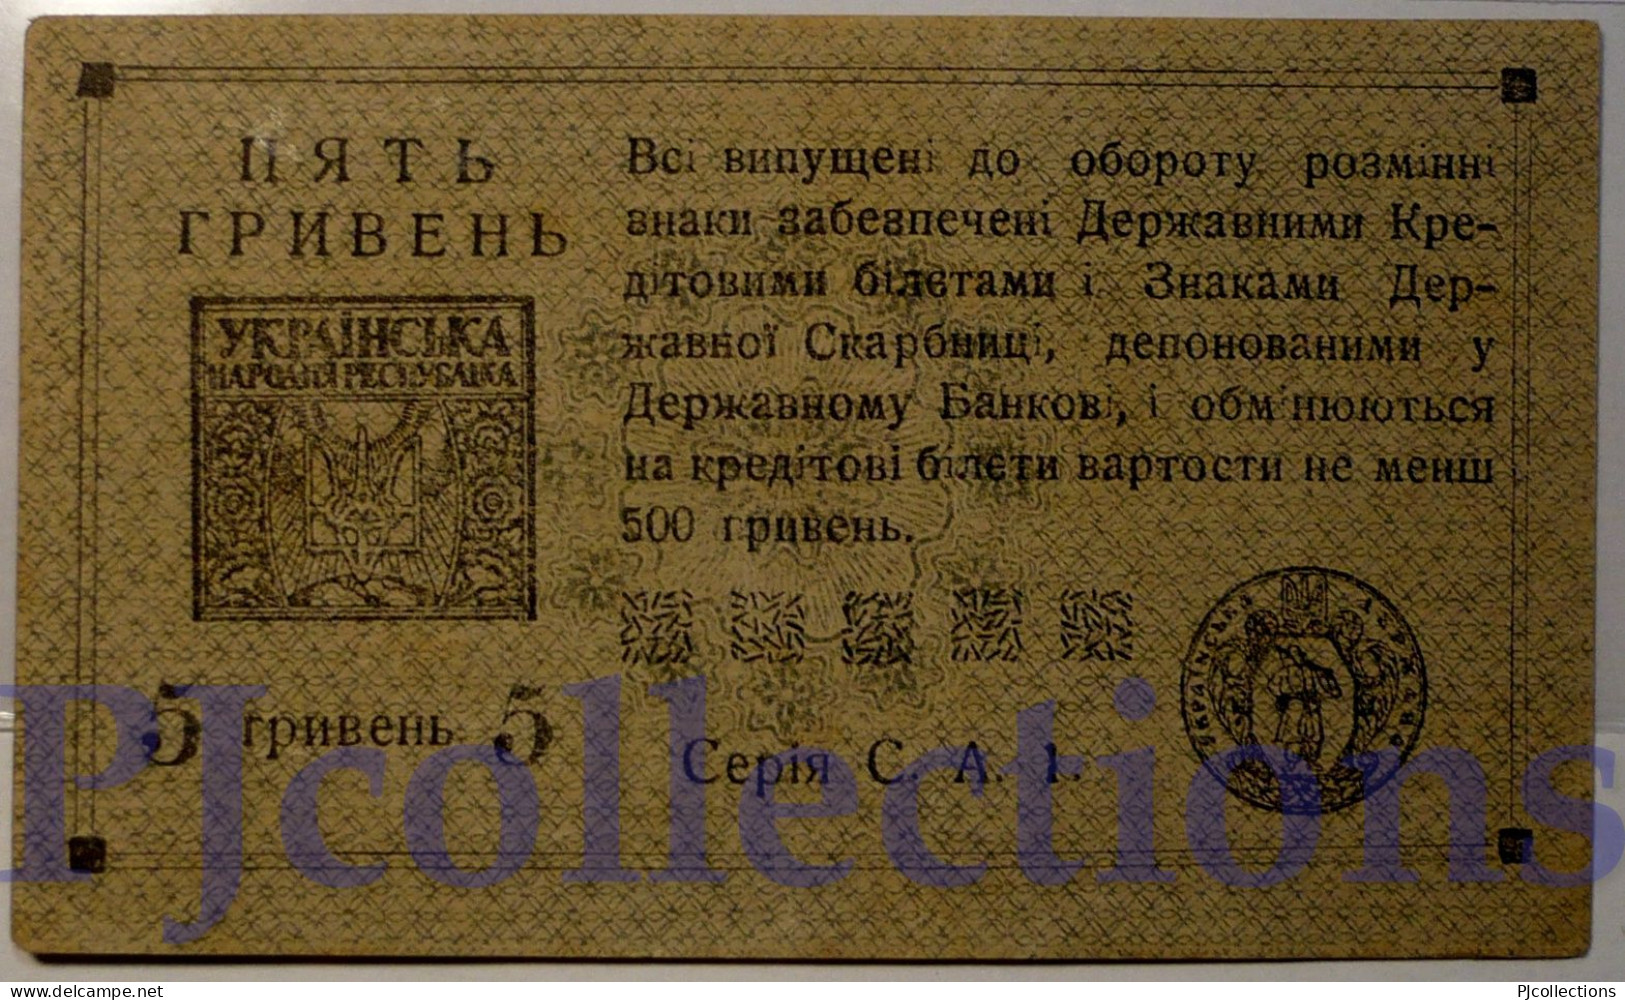 UKRAINE 5 HRYVEN 1920 PICK 41a AU RARE - Ukraine